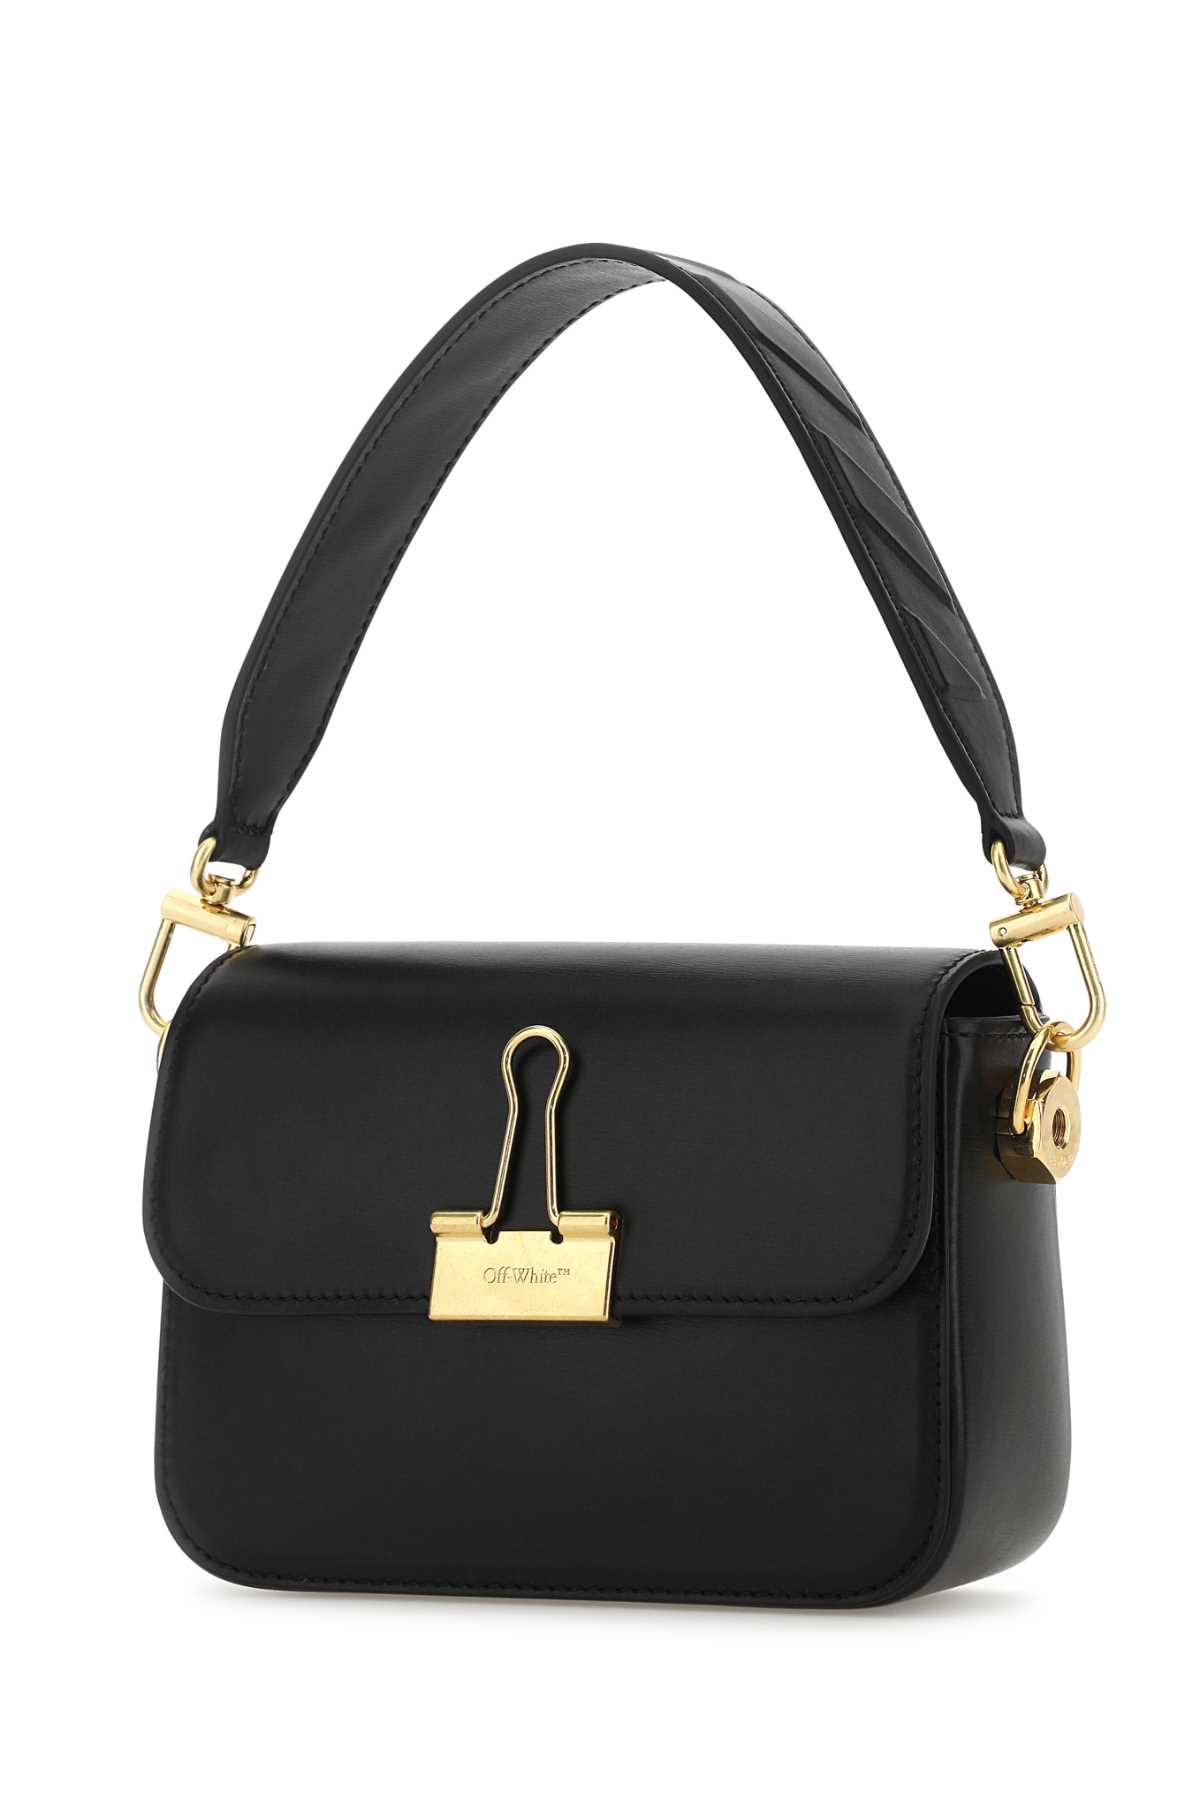 Off-white Black Leather Small Plain Binder Handbag